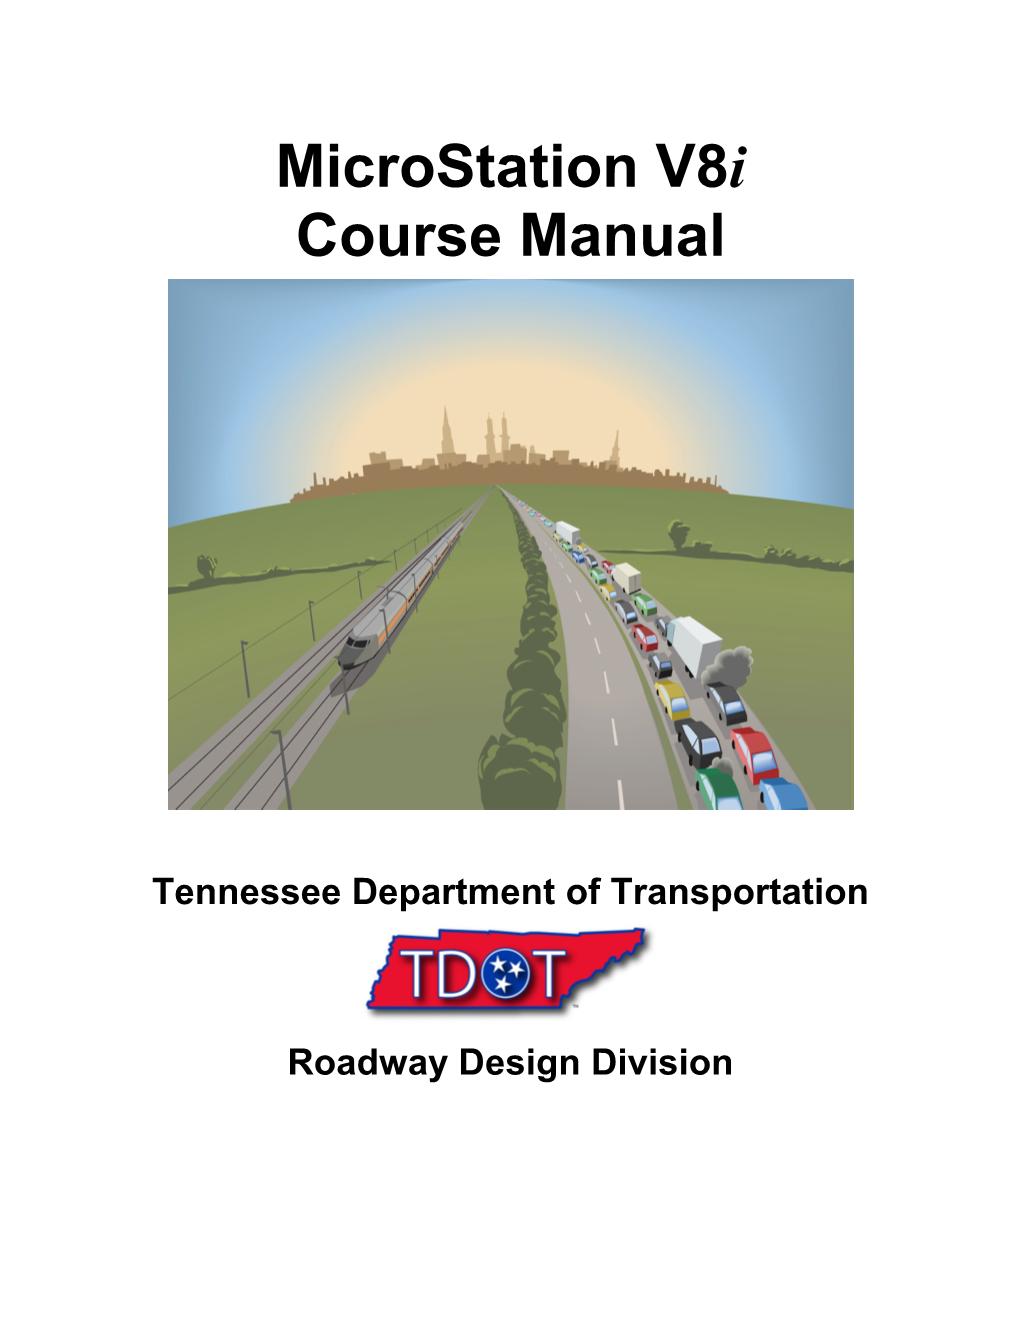 Microstation V8i Course Manual.Pdf